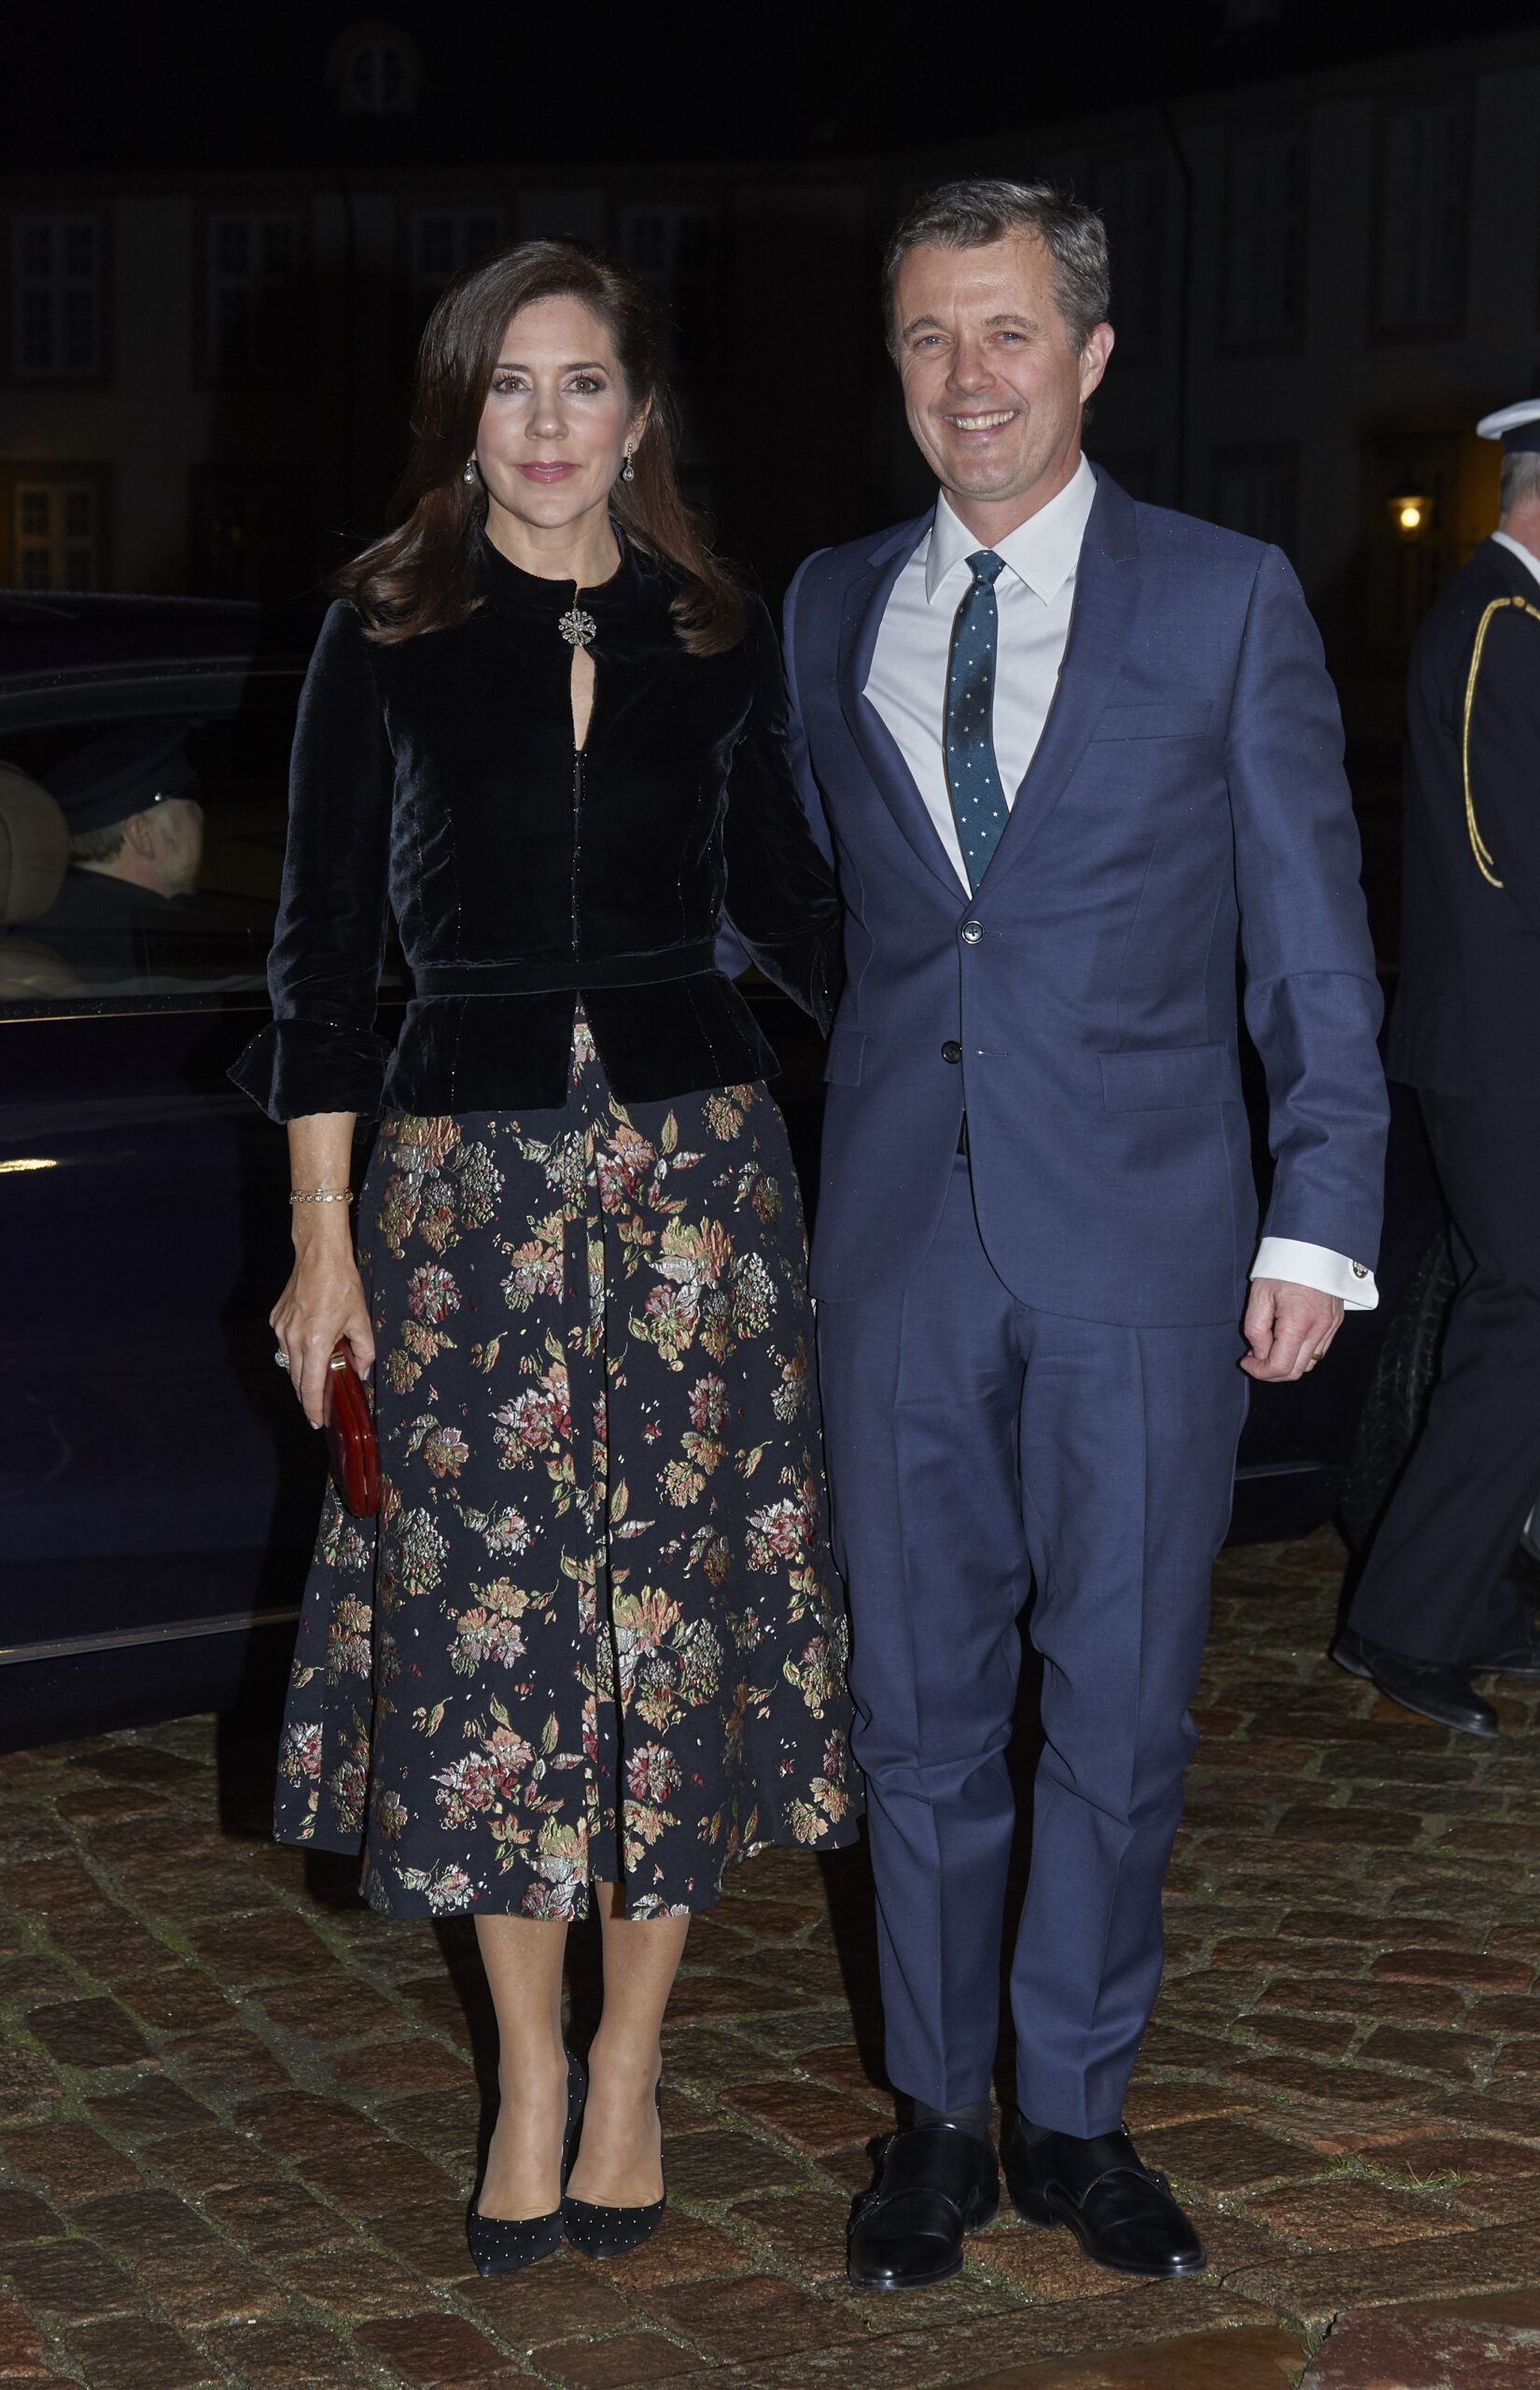 Prince Frederik and Princess Mary